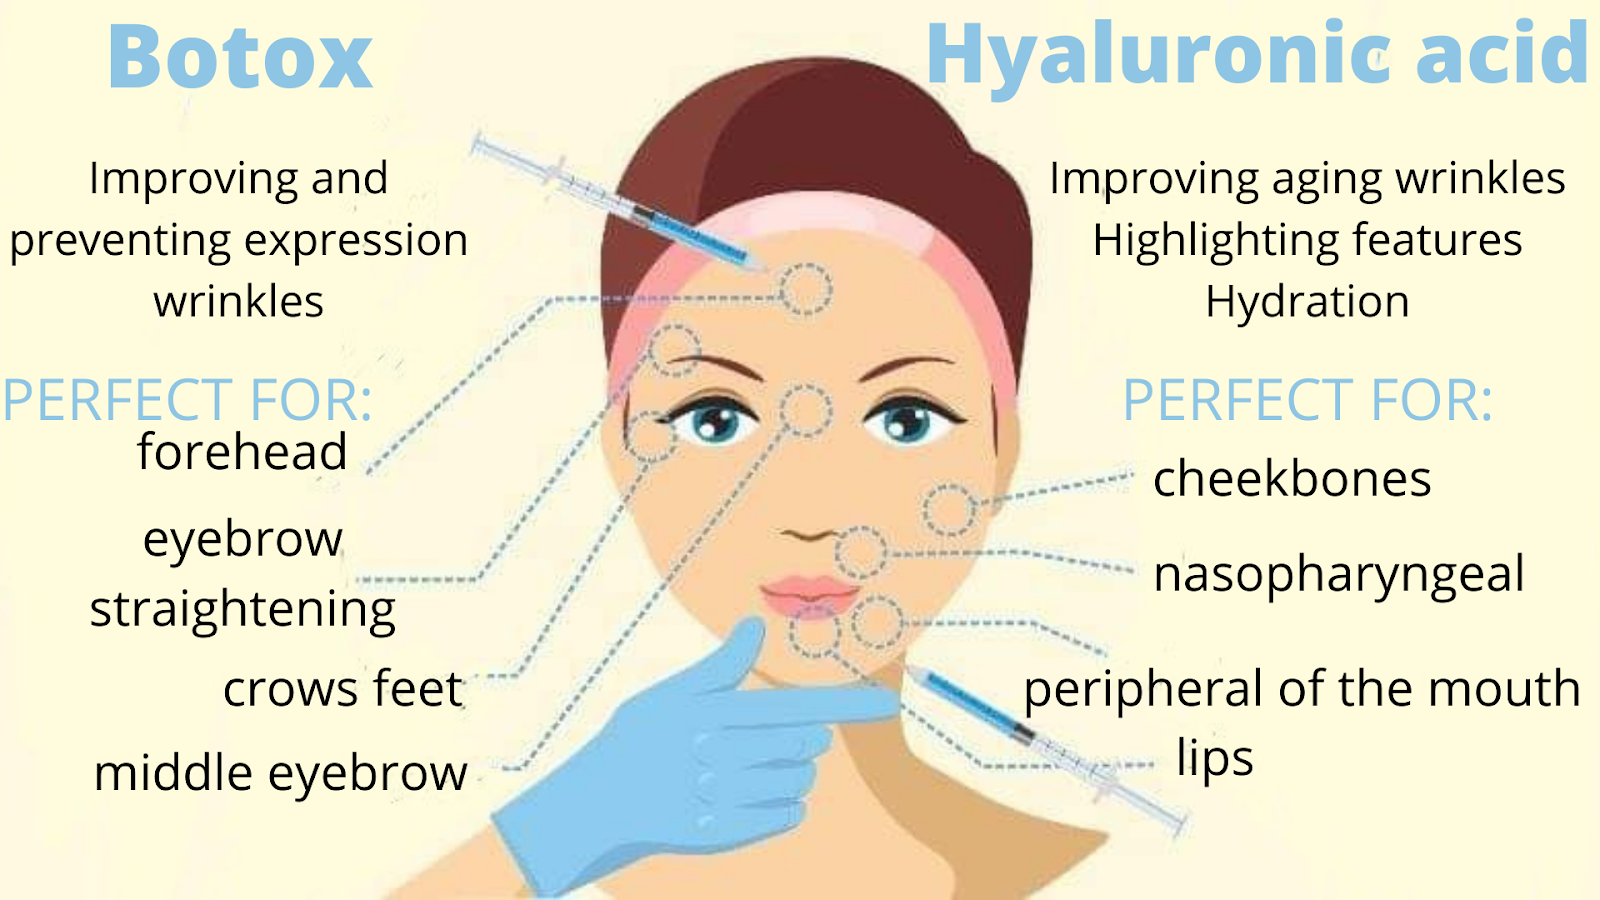 what to, choose botox or haluronic acid